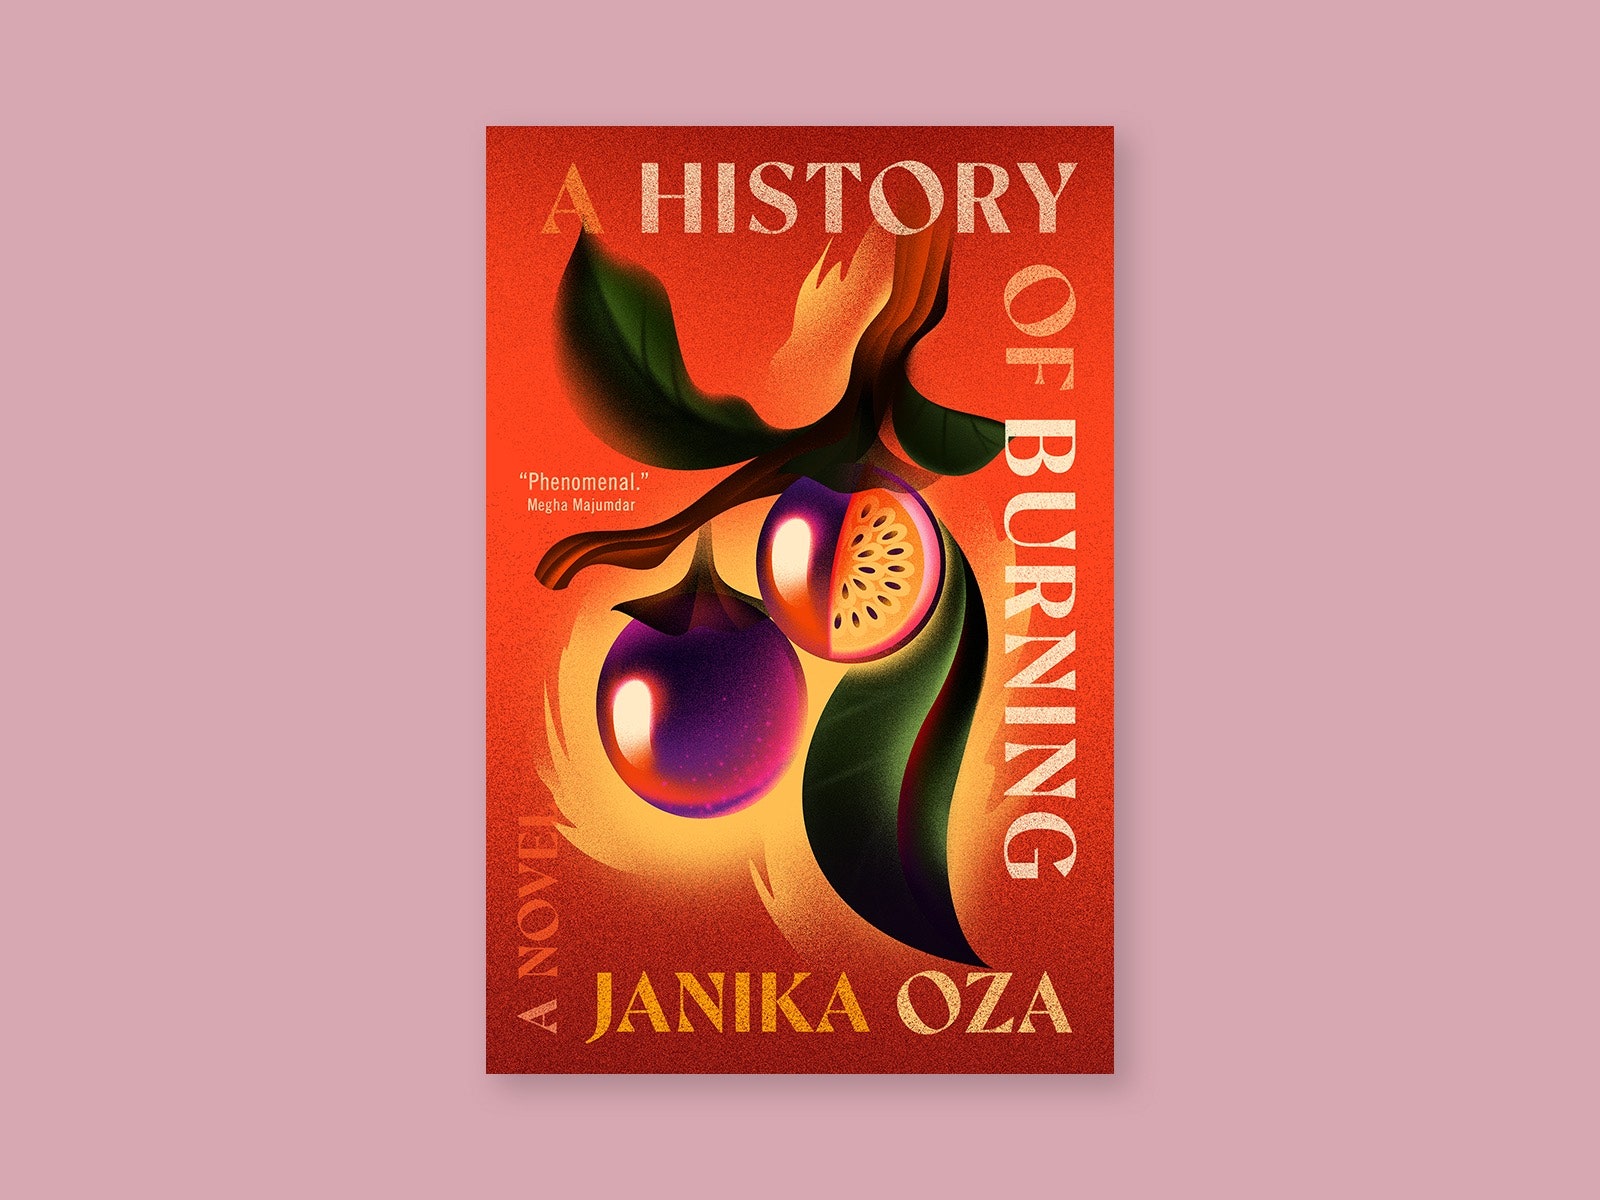 Das Cover des Buches „A History of Burning“ von Janika Oza.